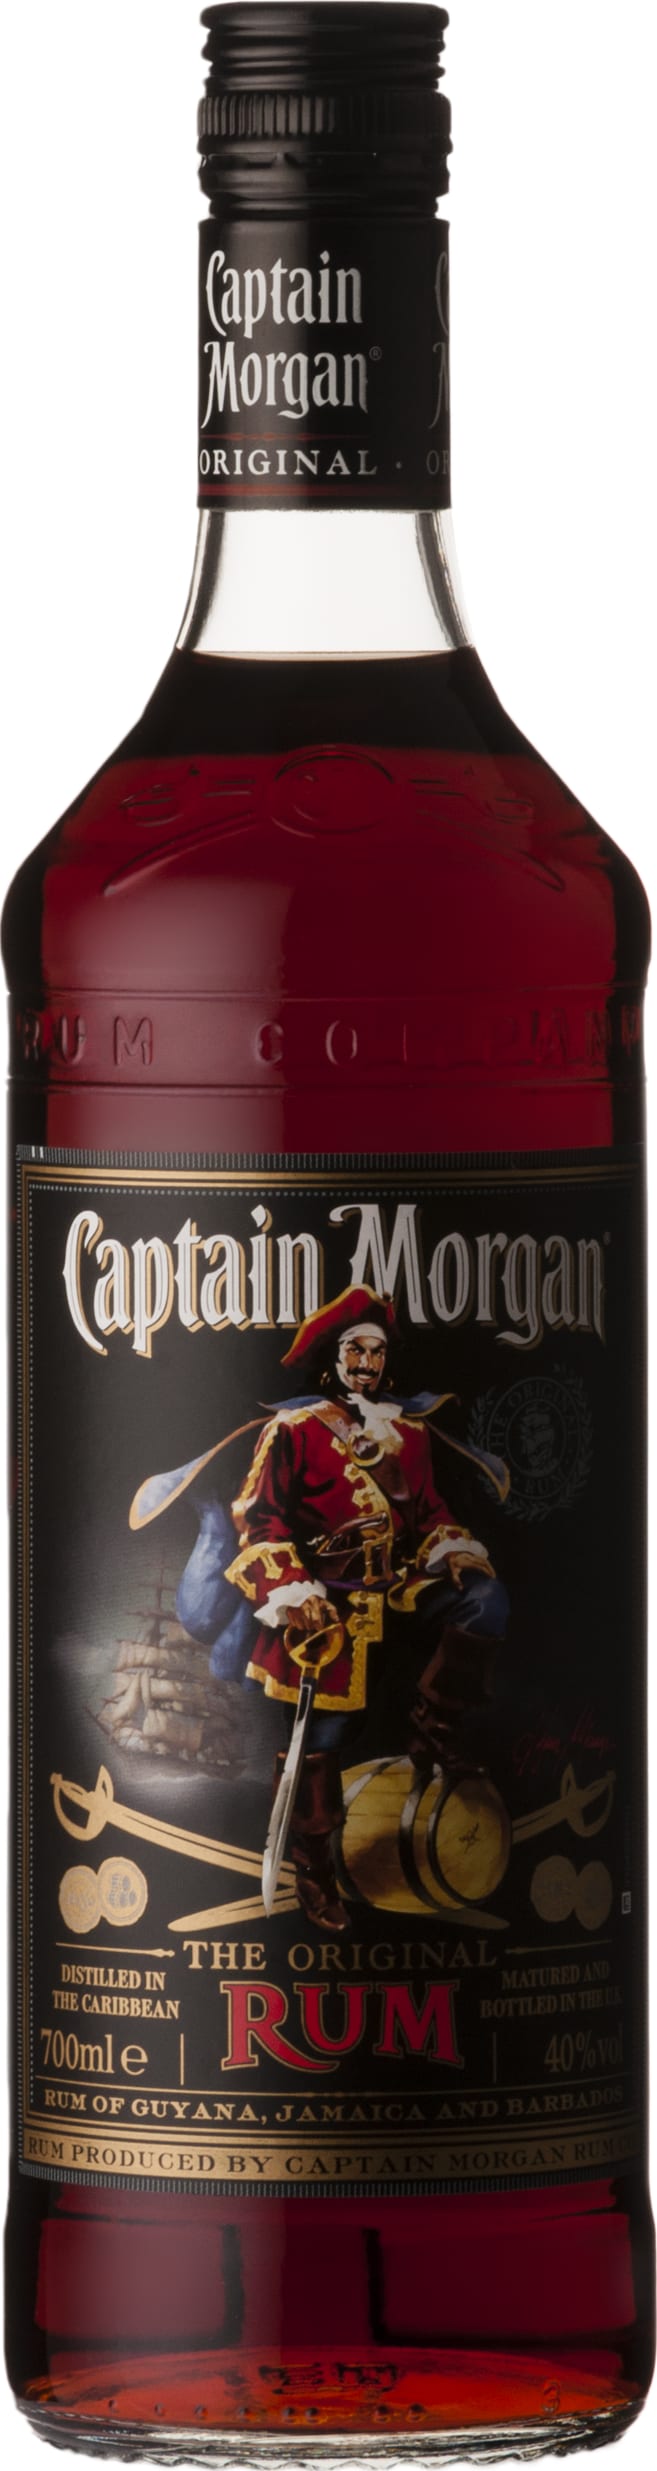 Captain Morgan Dark Rum 70cl NV - Buy Captain Morgan Wines from GREAT WINES DIRECT wine shop